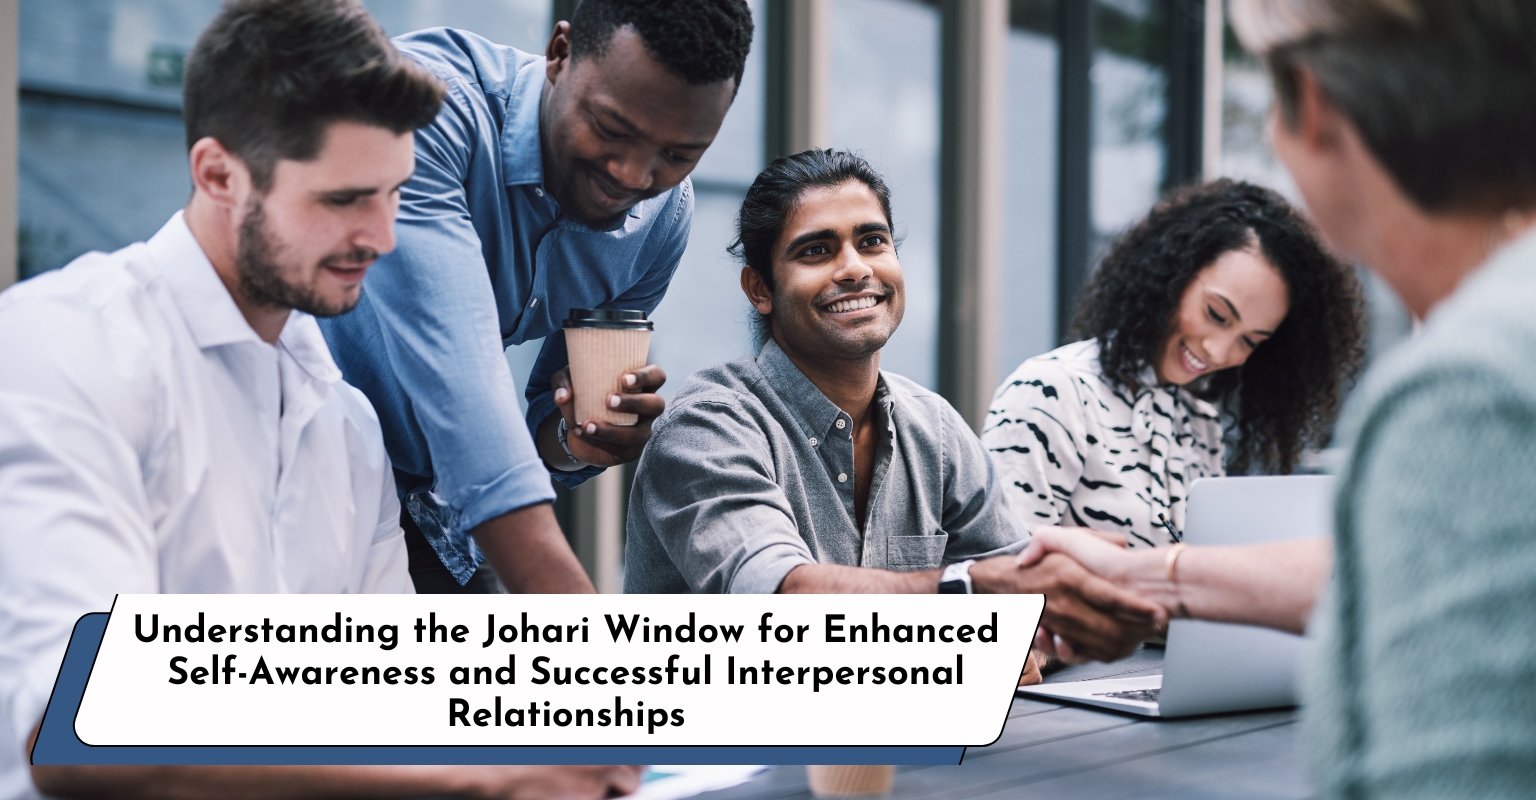 Visual Representation of the Johari Window for Self-Awareness and Success